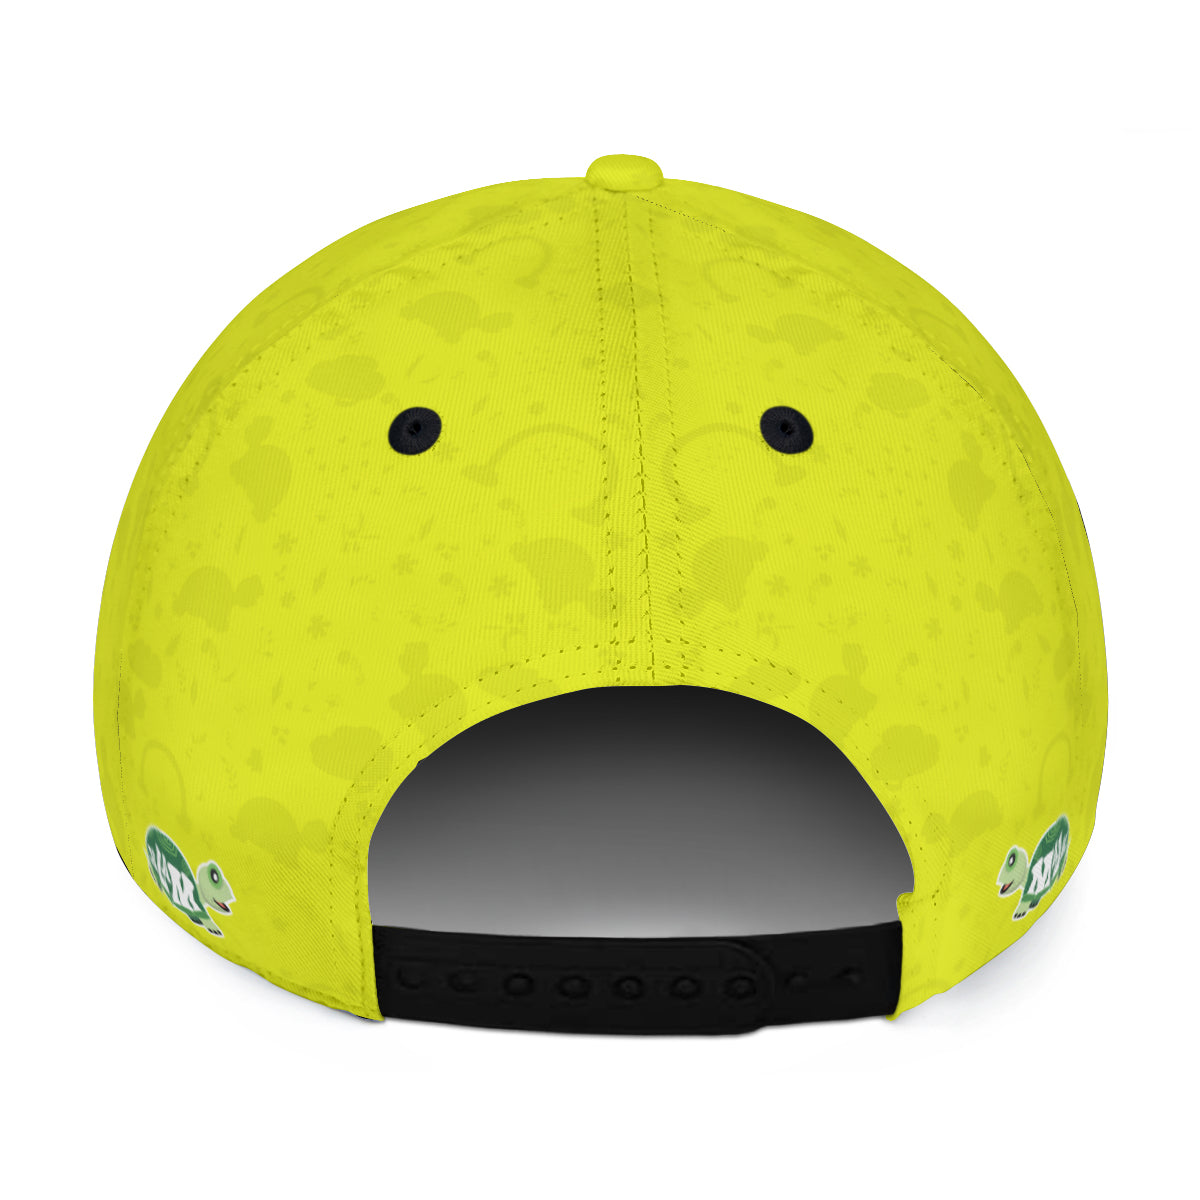 Full width flat visor brim hat "Happy Days-lemon/lime"